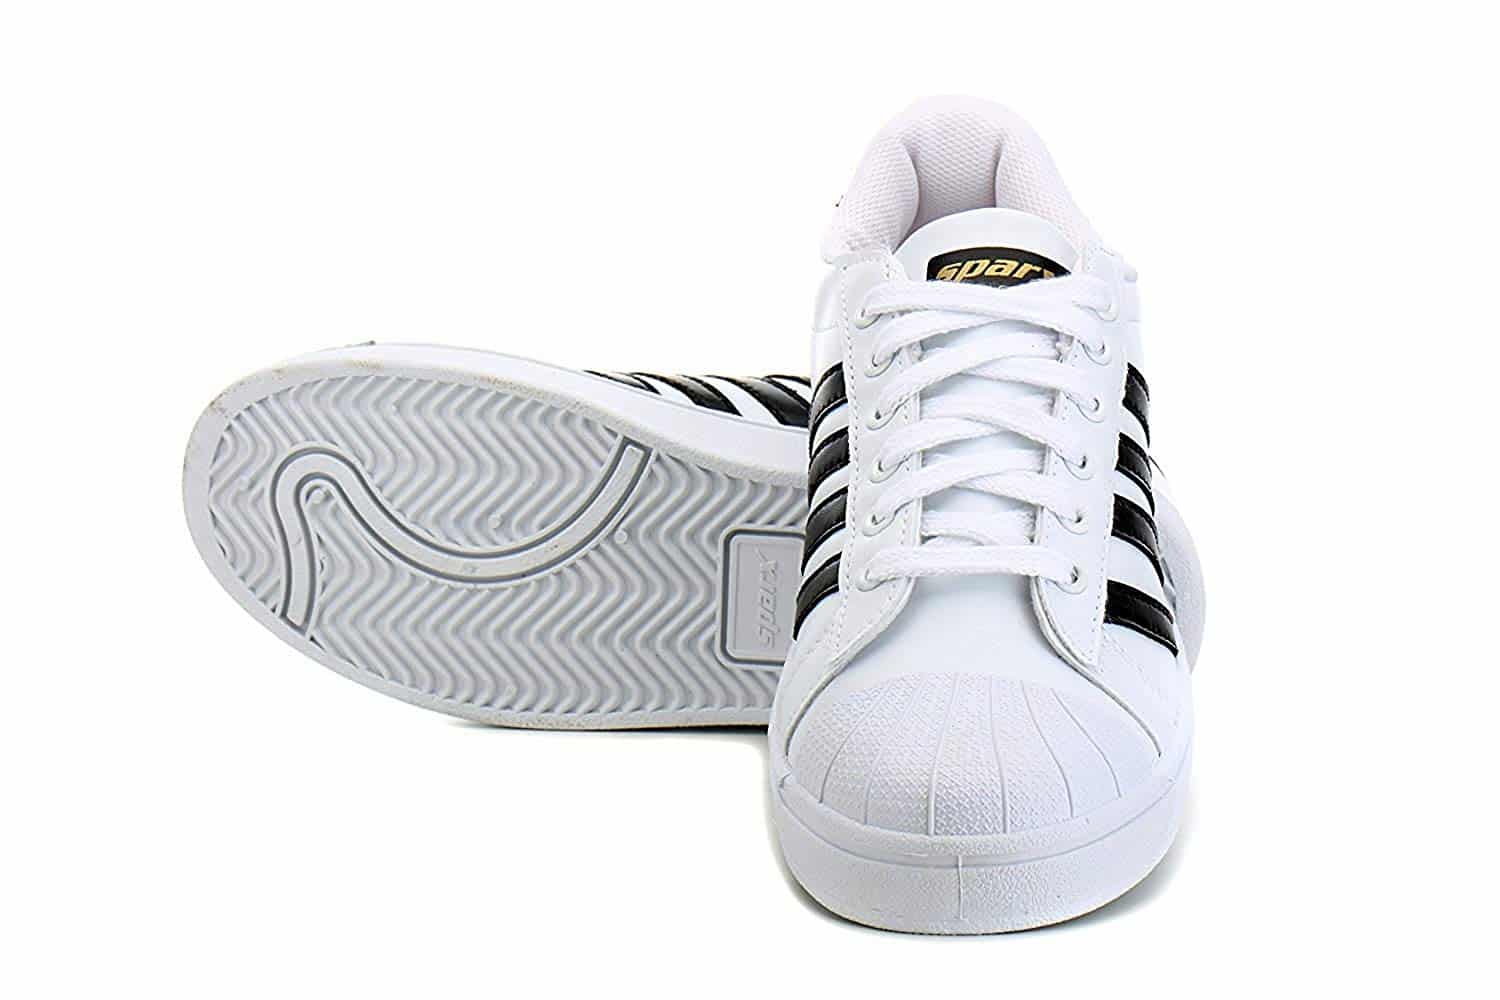 Buy Running shoes for women SL 199 - Shoes for Women | Relaxo